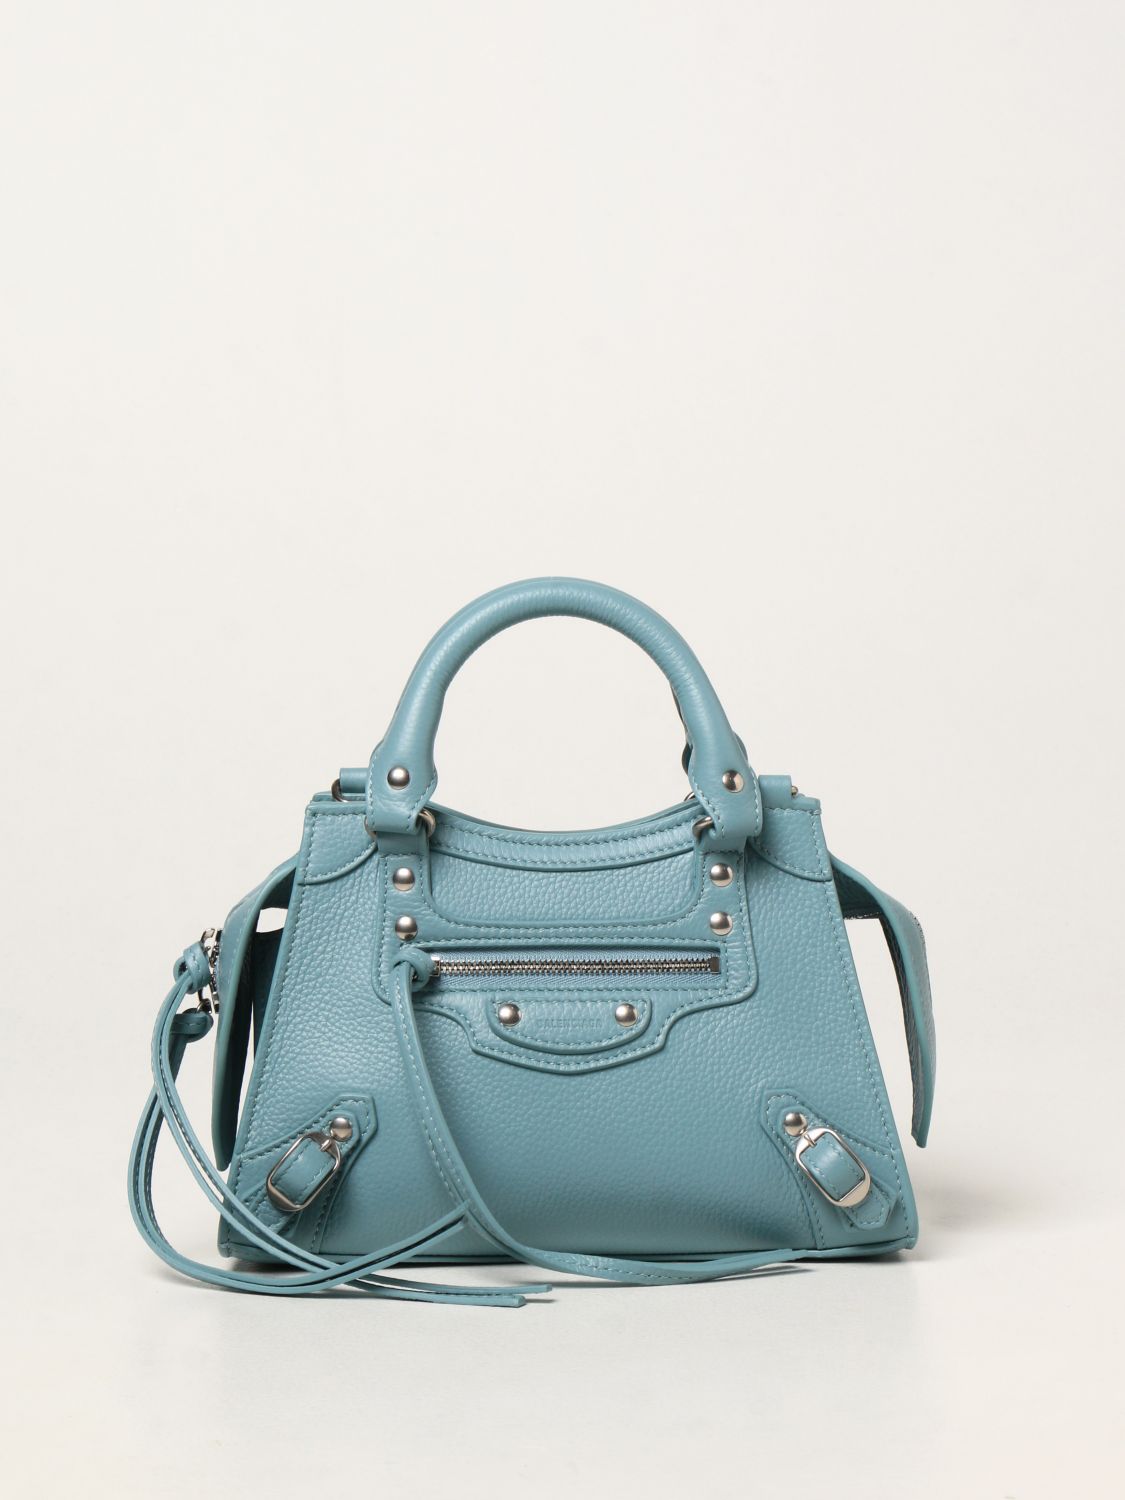 Neo mini bag in grained leather - Blue Balenciaga mini bag 638524 15Y4Y online on GIGLIO.COM